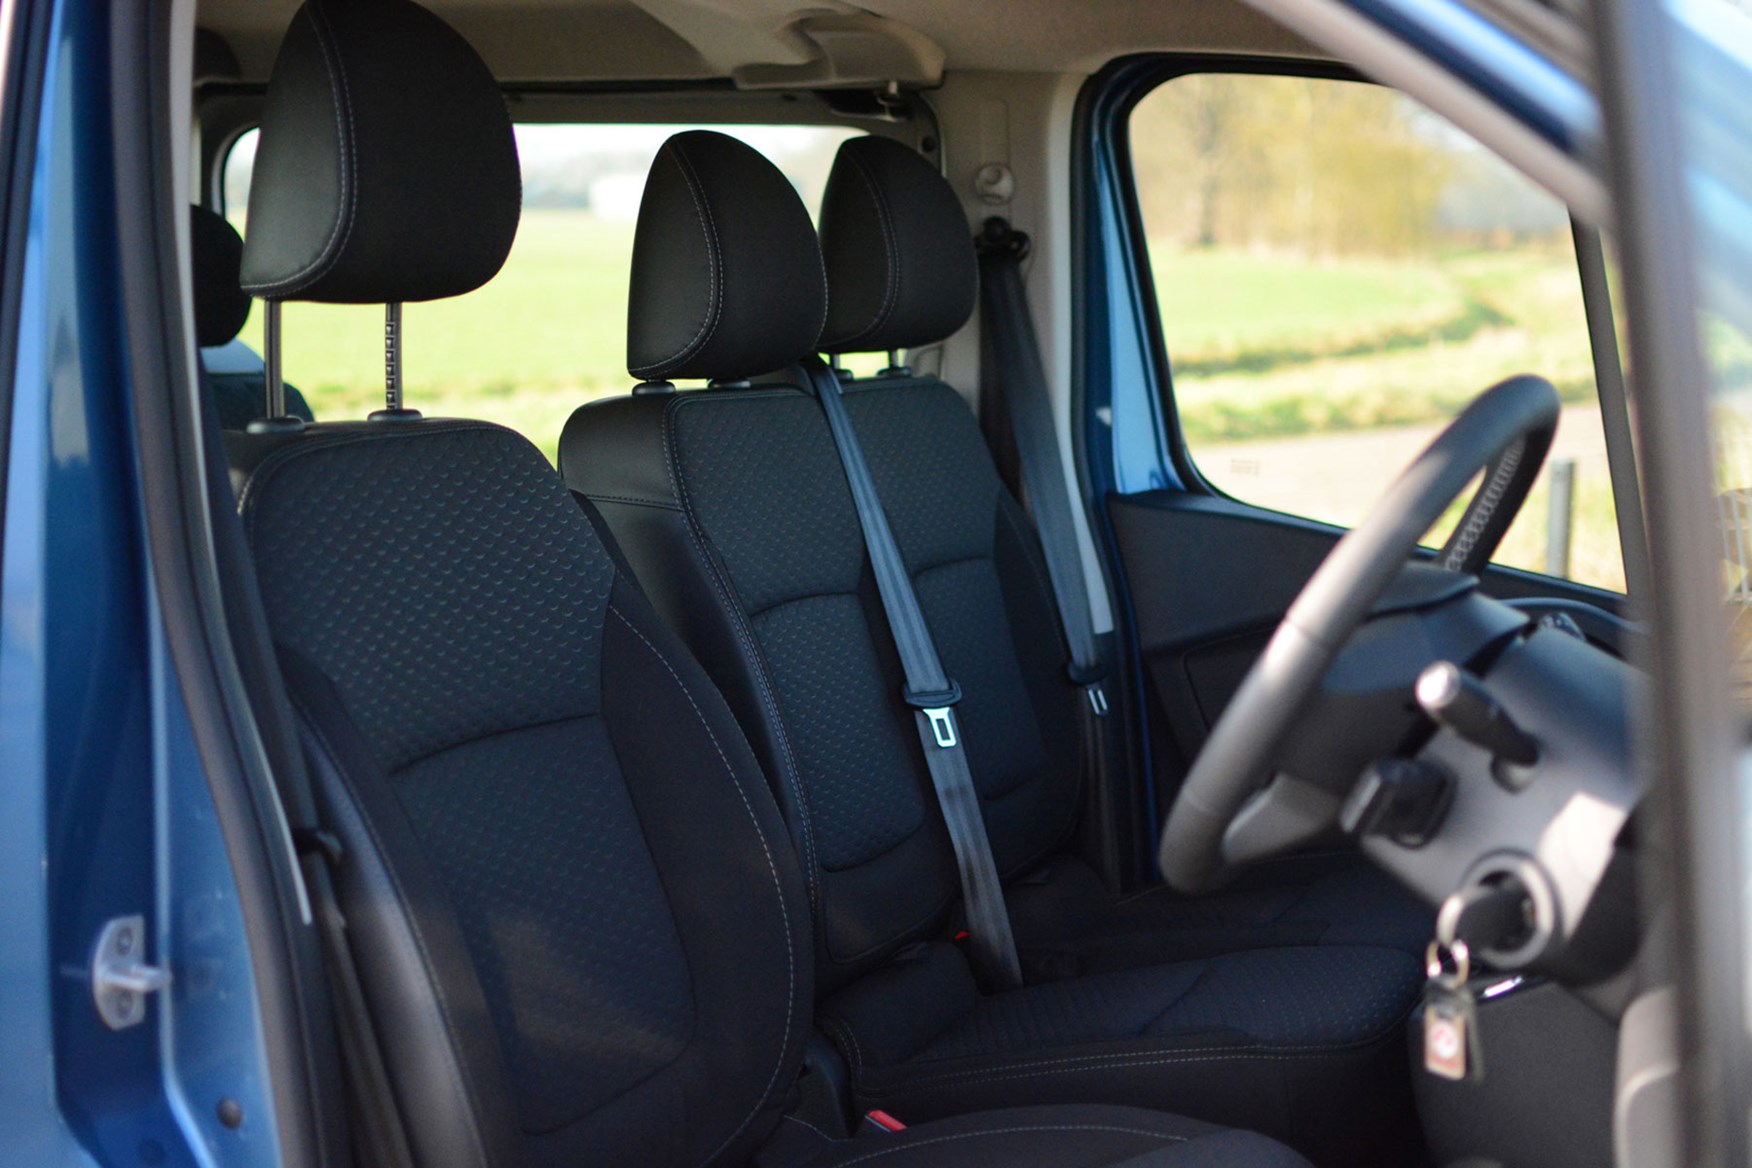 Vauxhall Vivaro Doublecab Sportive review - front seats